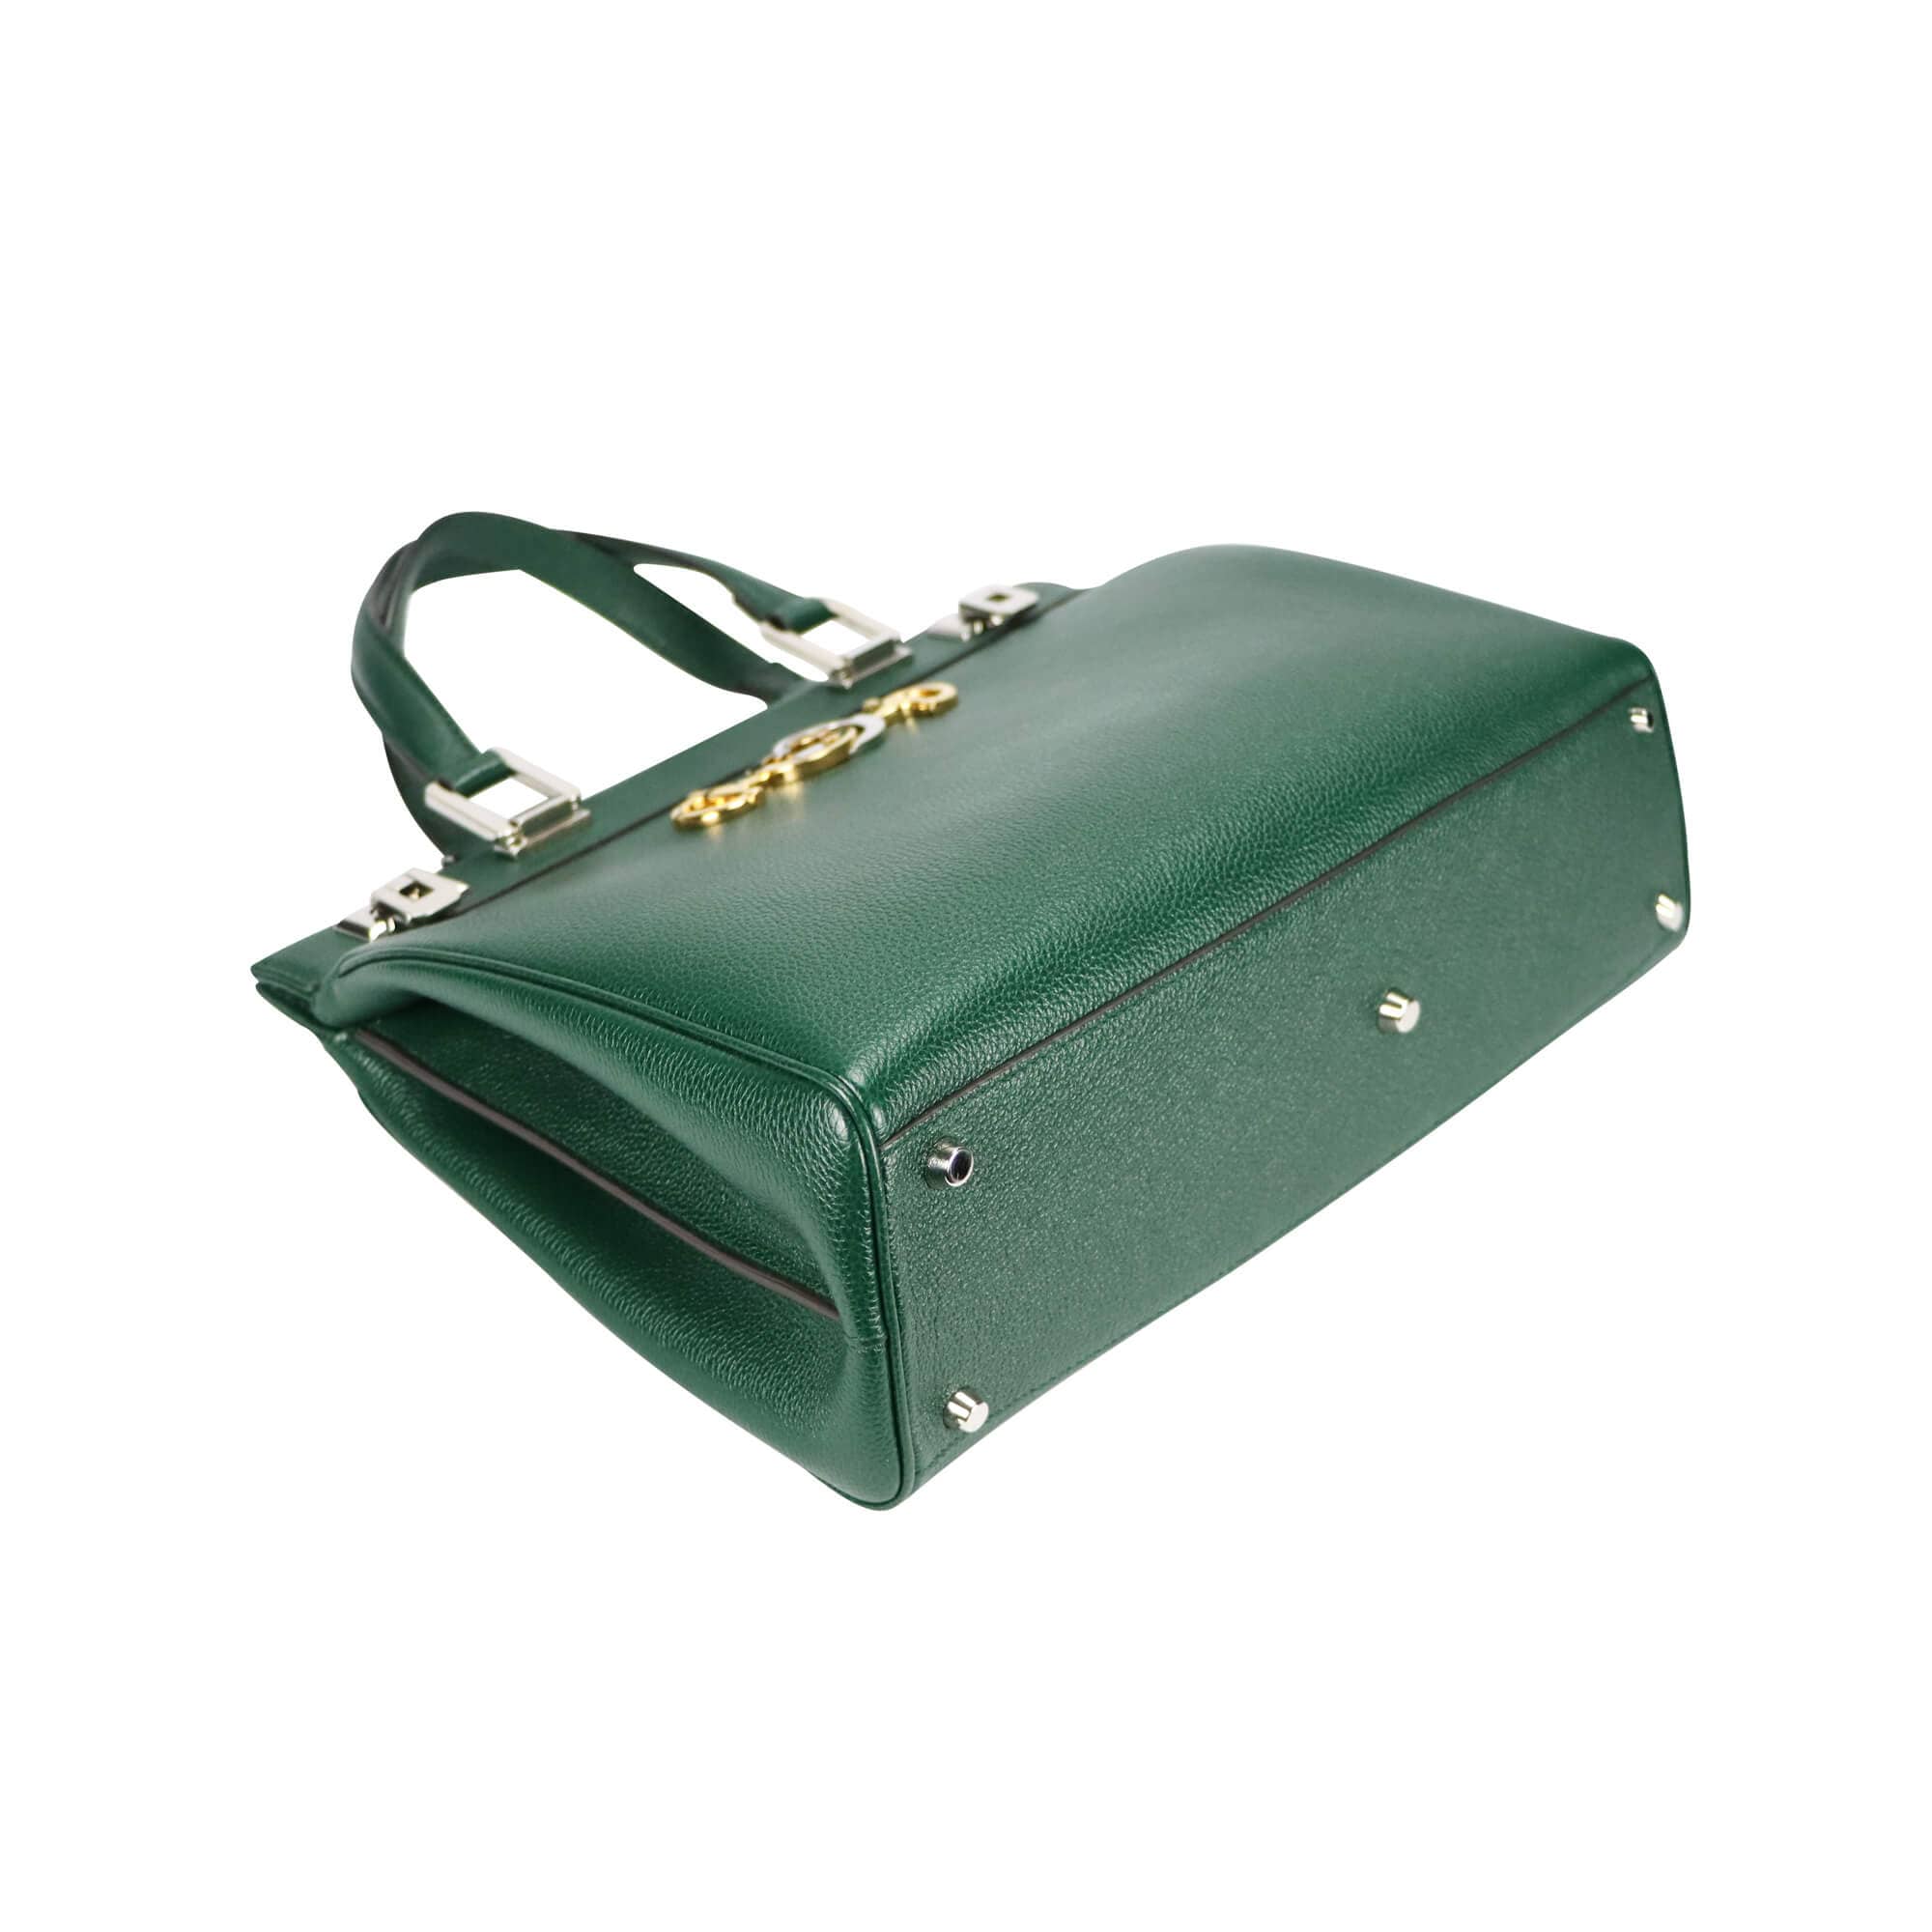 Zumi leather handbag Gucci Beige in Leather - 25699913